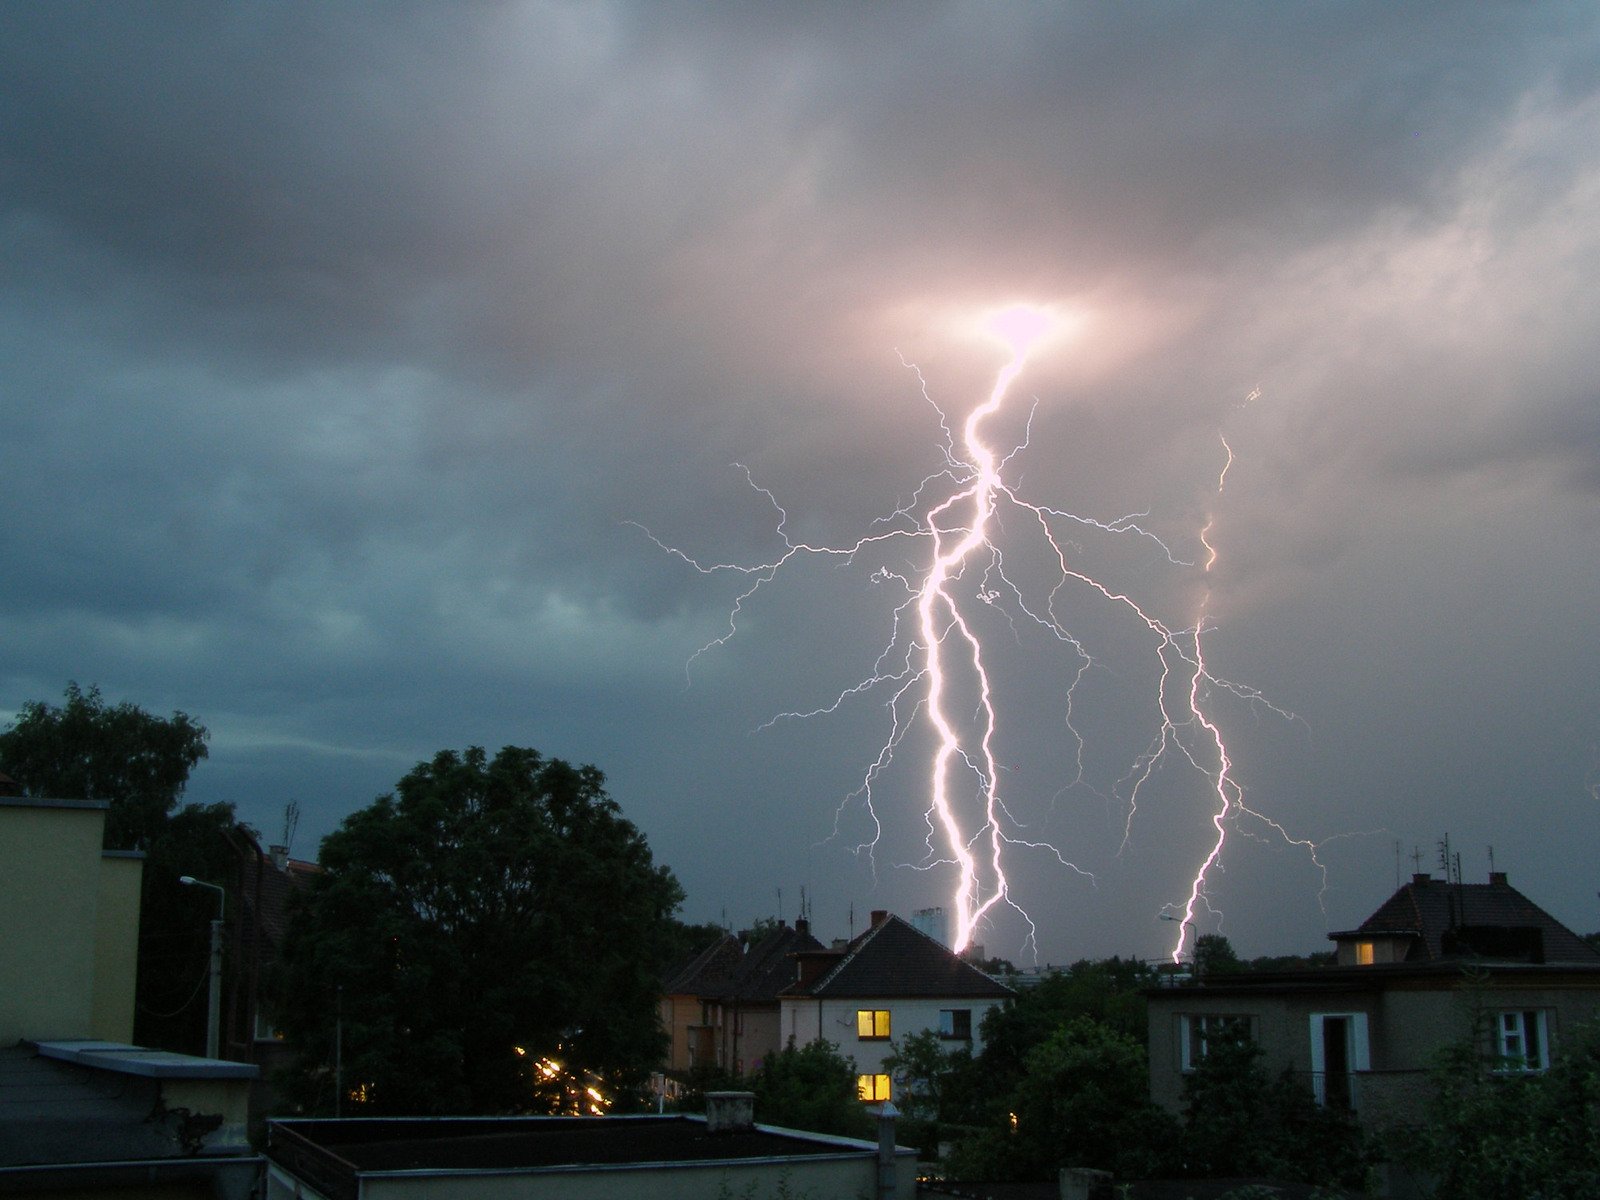 Roof Struck By Lightning